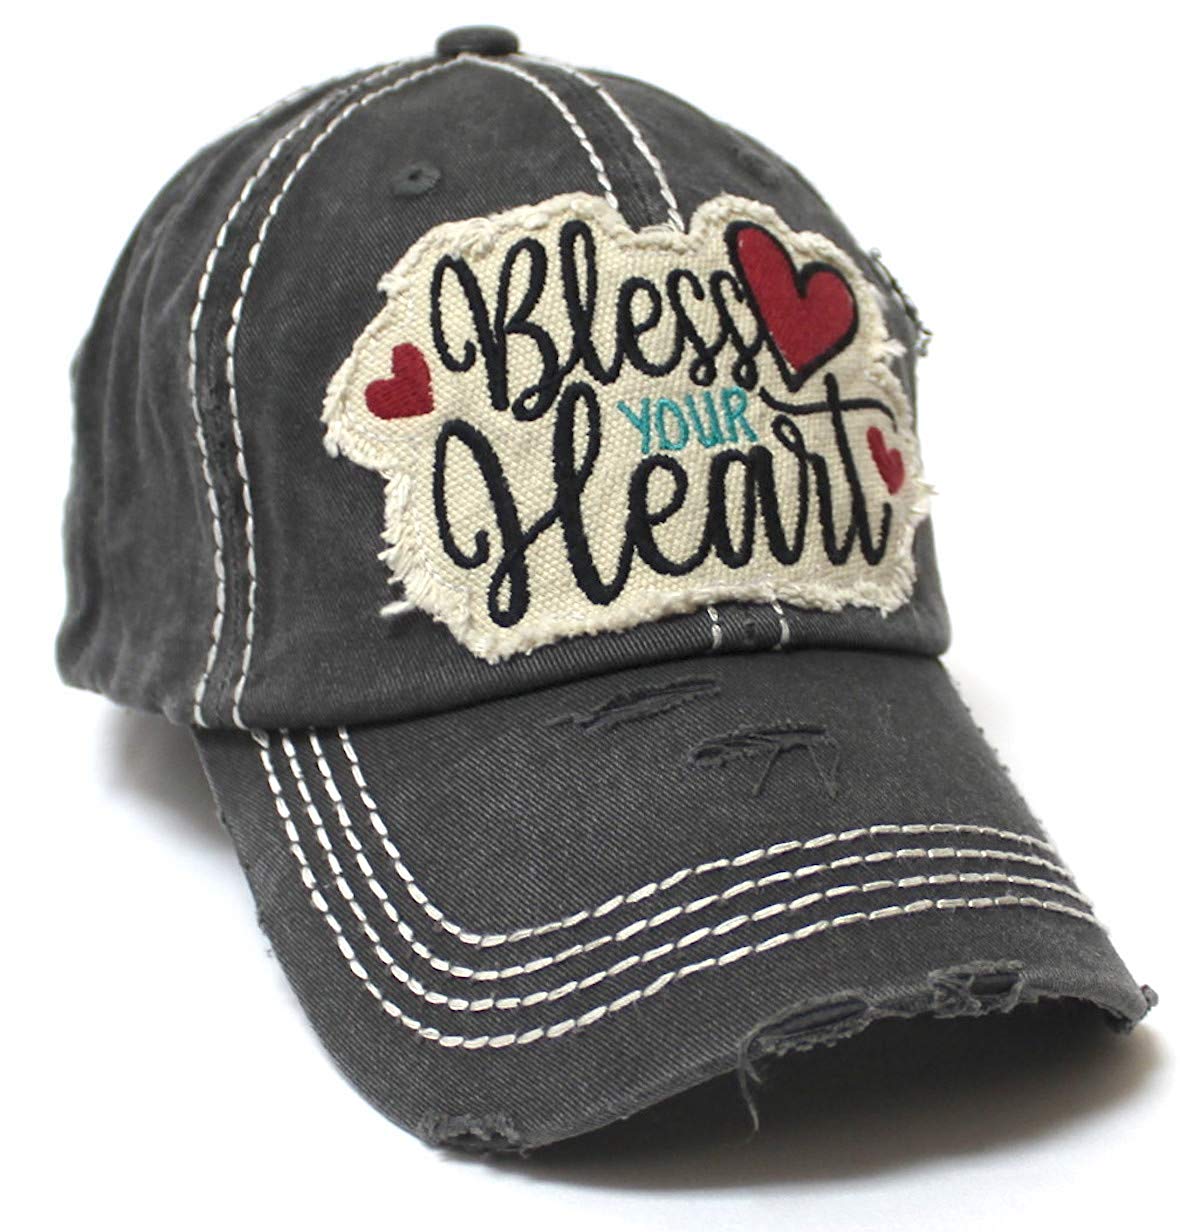 CAPS 'N VINTAGE Women's Baseball Cap Bless Your Heart Patch Embroidery & Hearts Monogram, Black - Caps 'N Vintage 